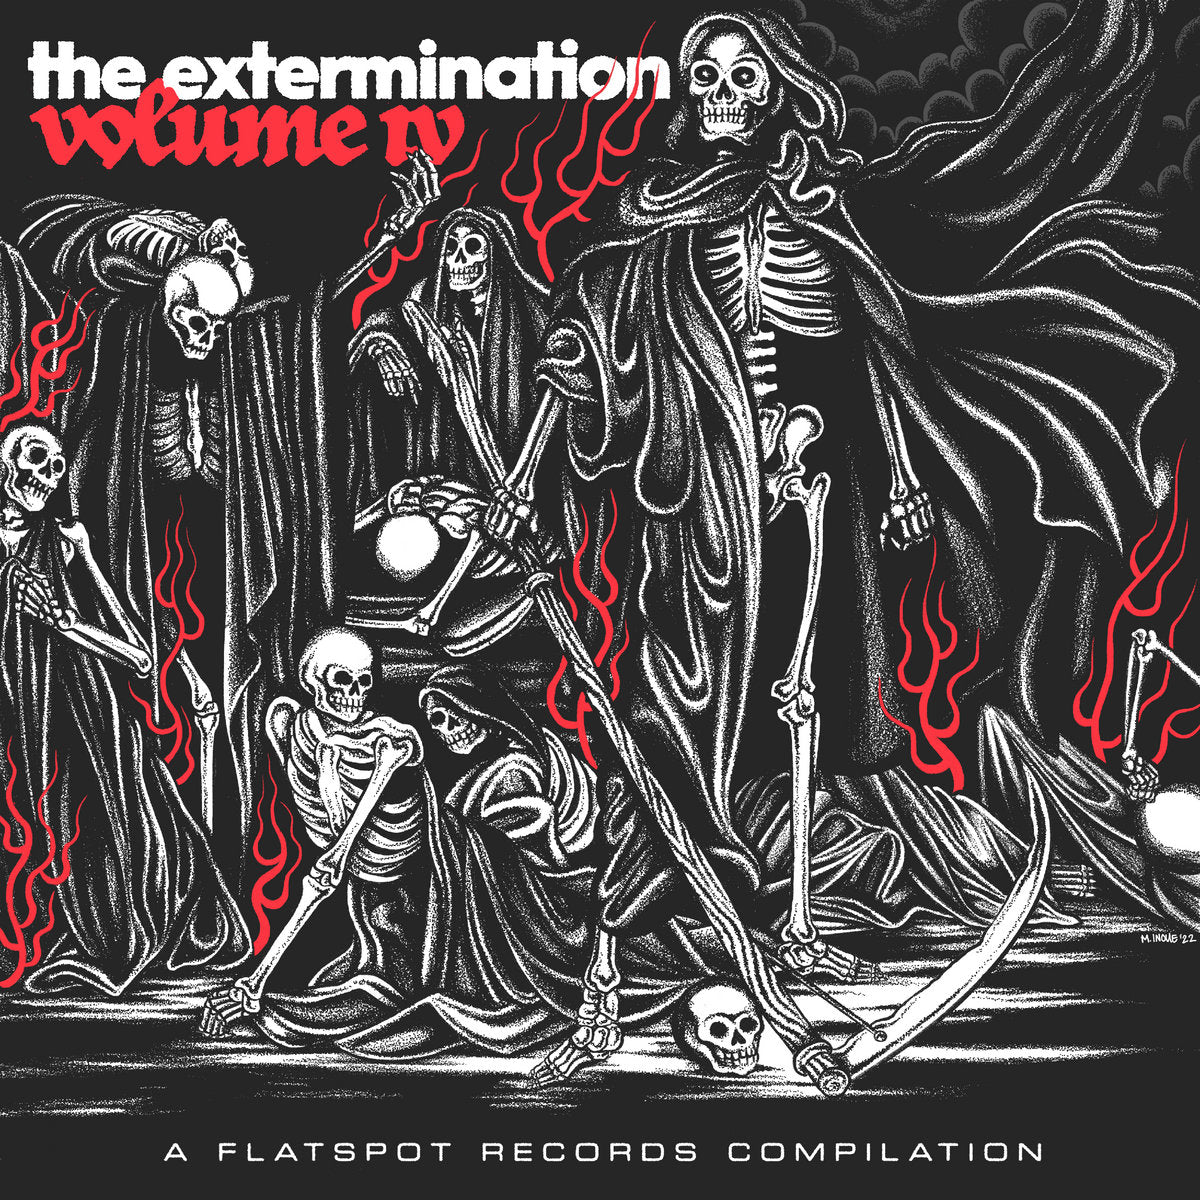 Various Artists "The Extermination Compilation: Volume IV" 12" Vinyl